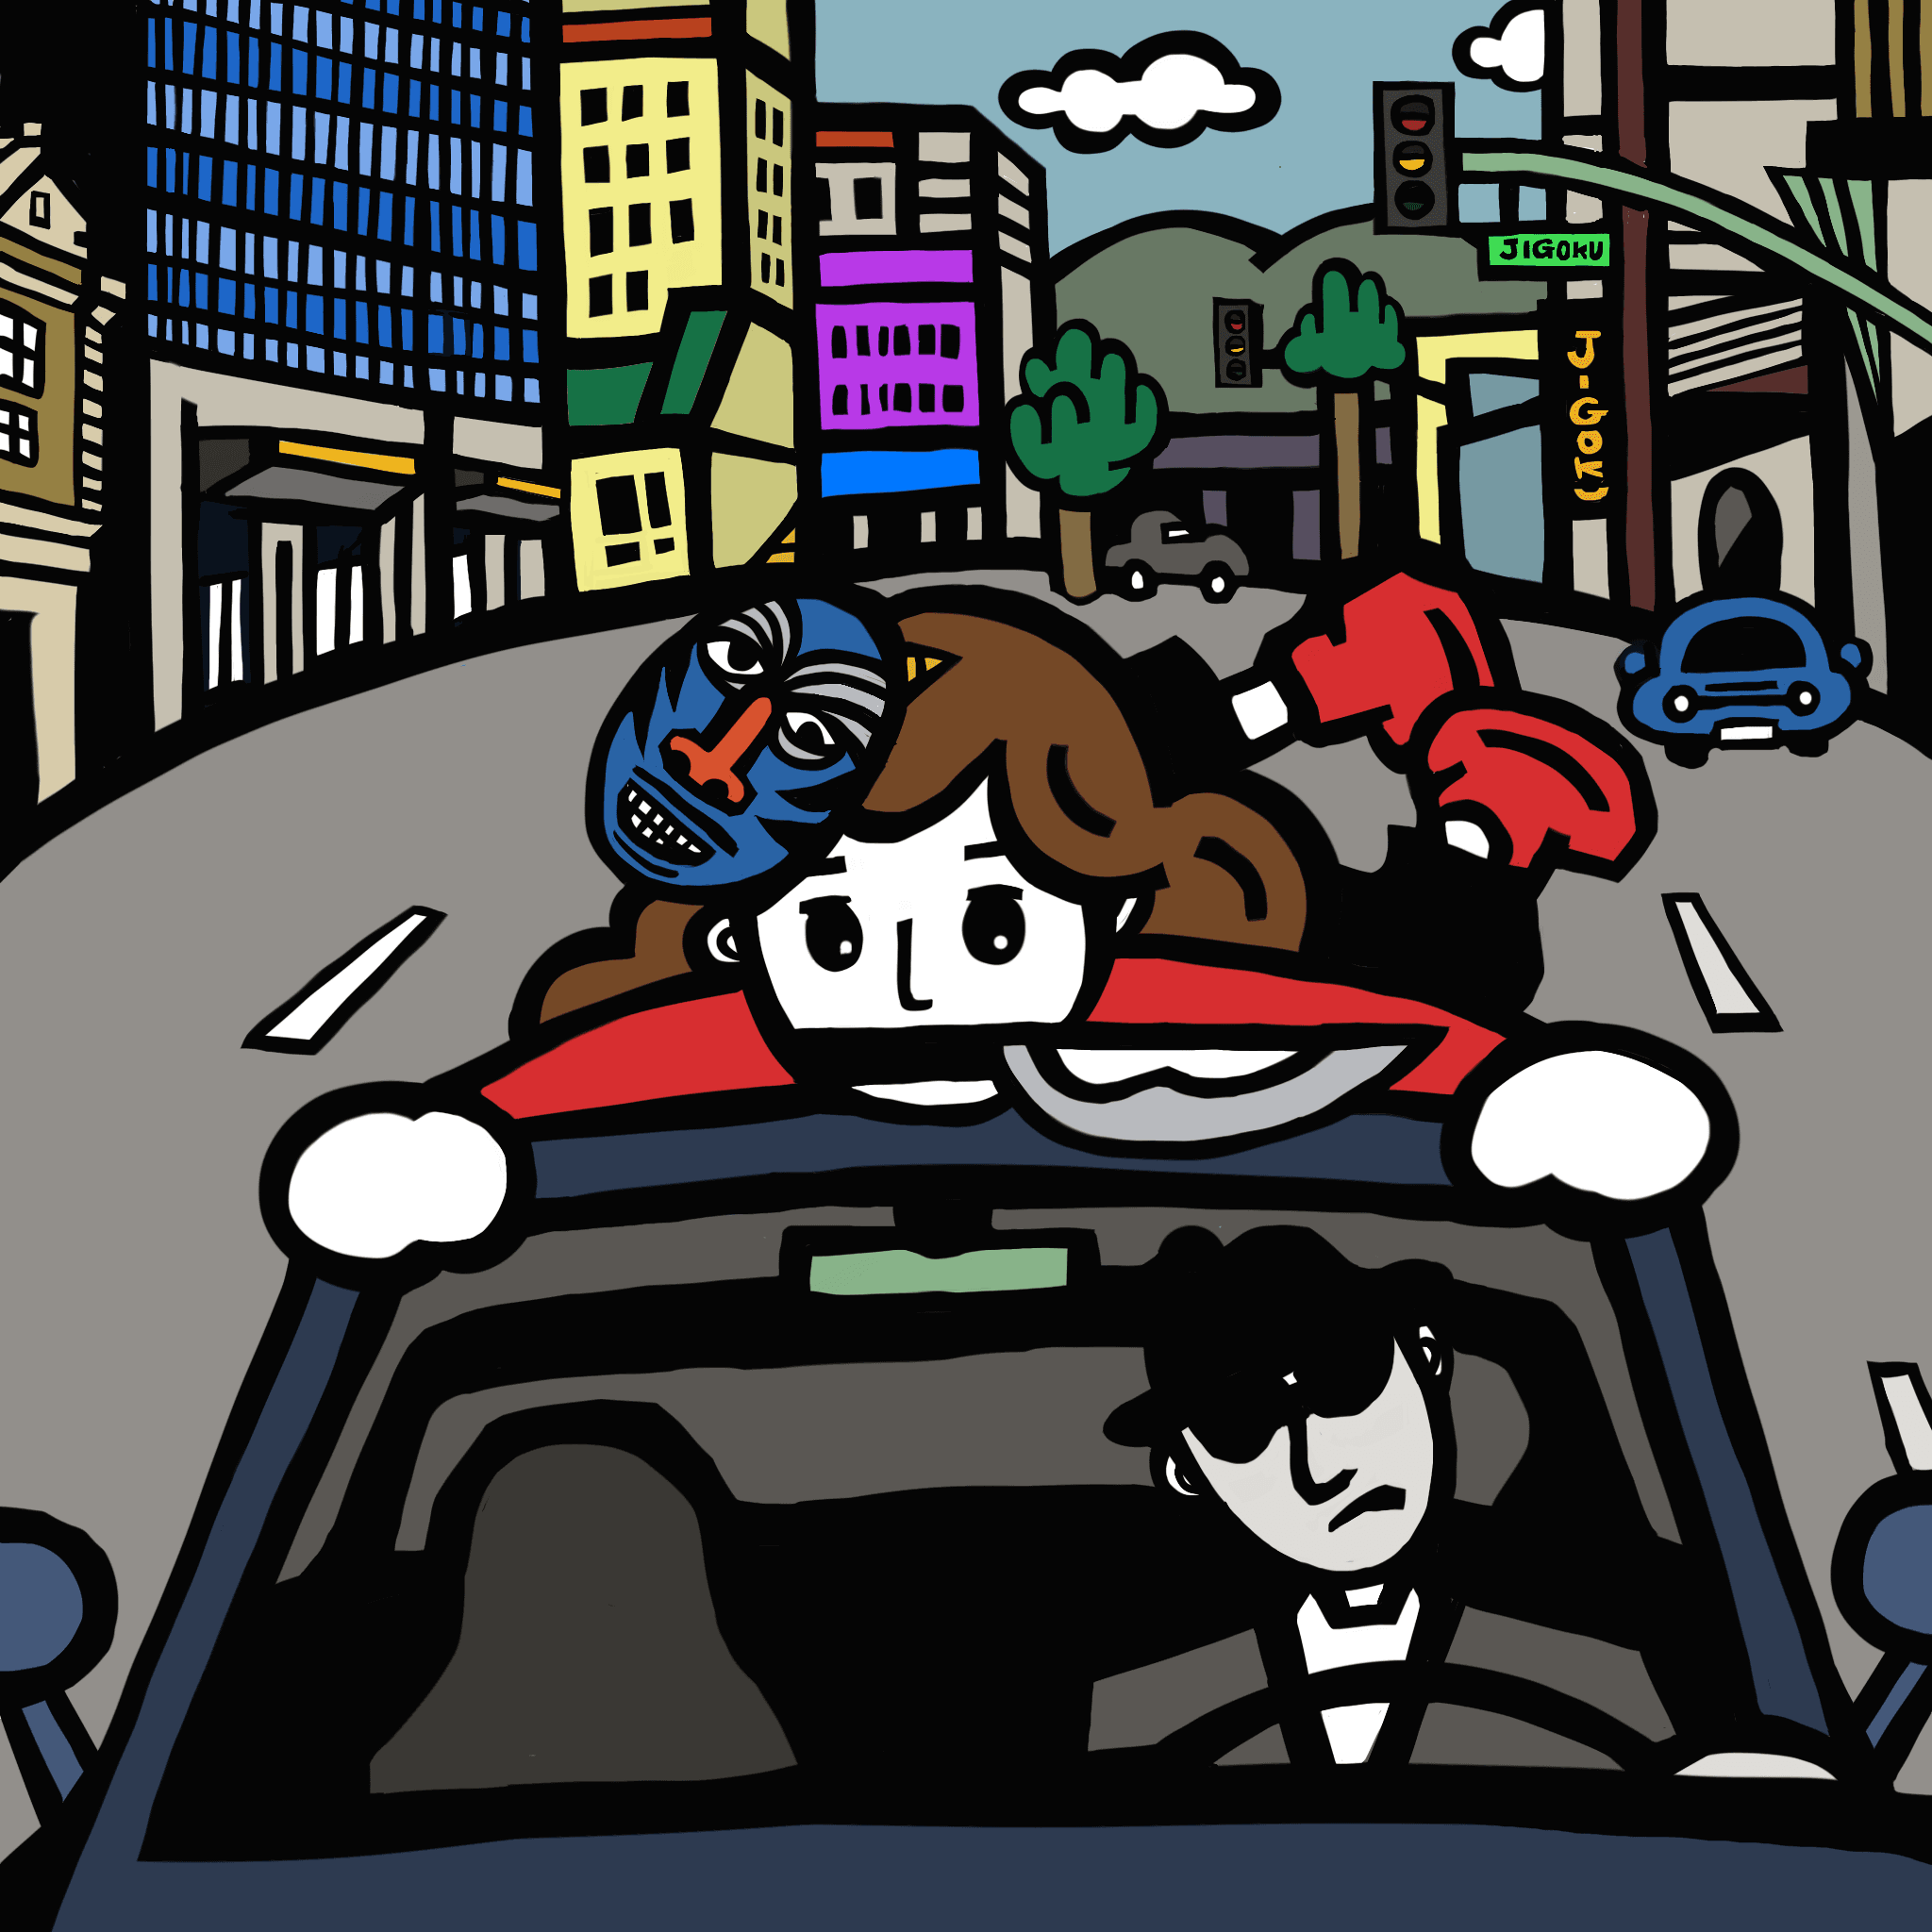 #001 Jigoku_Girl on top of the car.